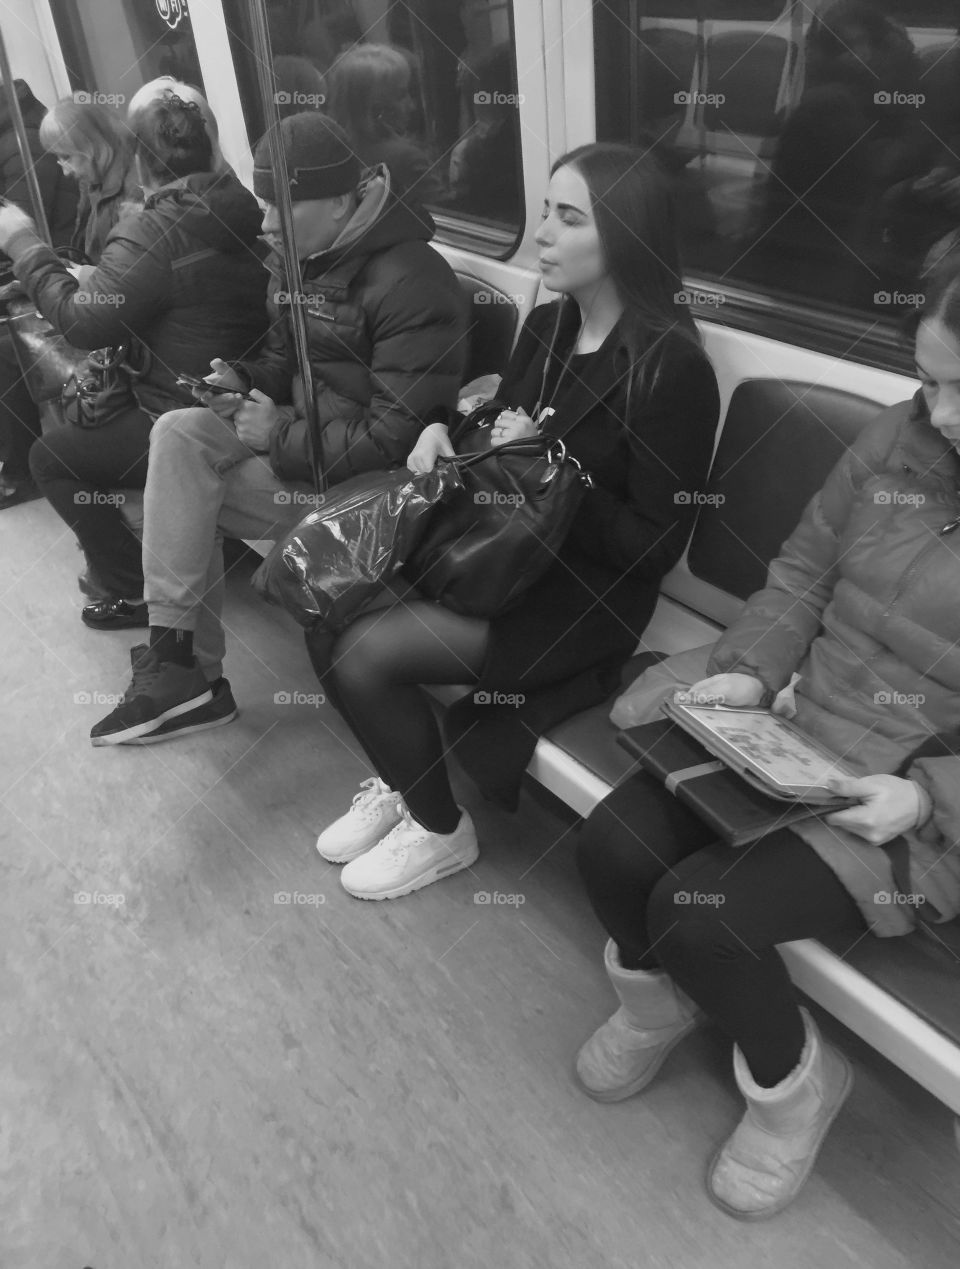 Moscow metro girl